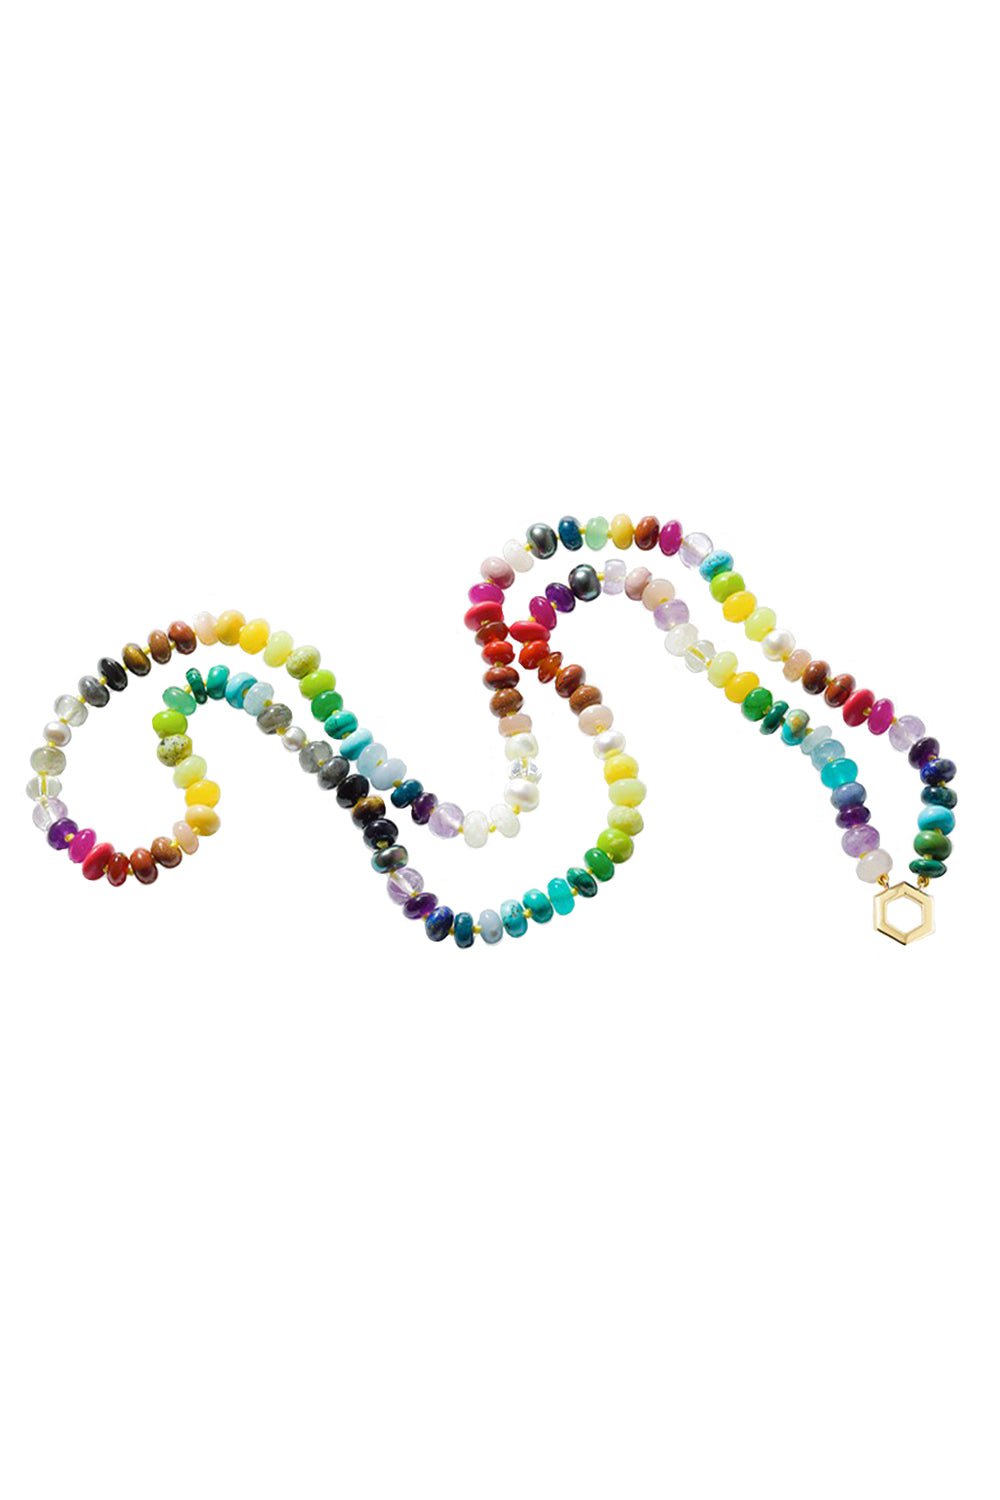 HARWELL GODFREY-Rainbow Bead Foundation Necklace - 32in-YELLOW GOLD